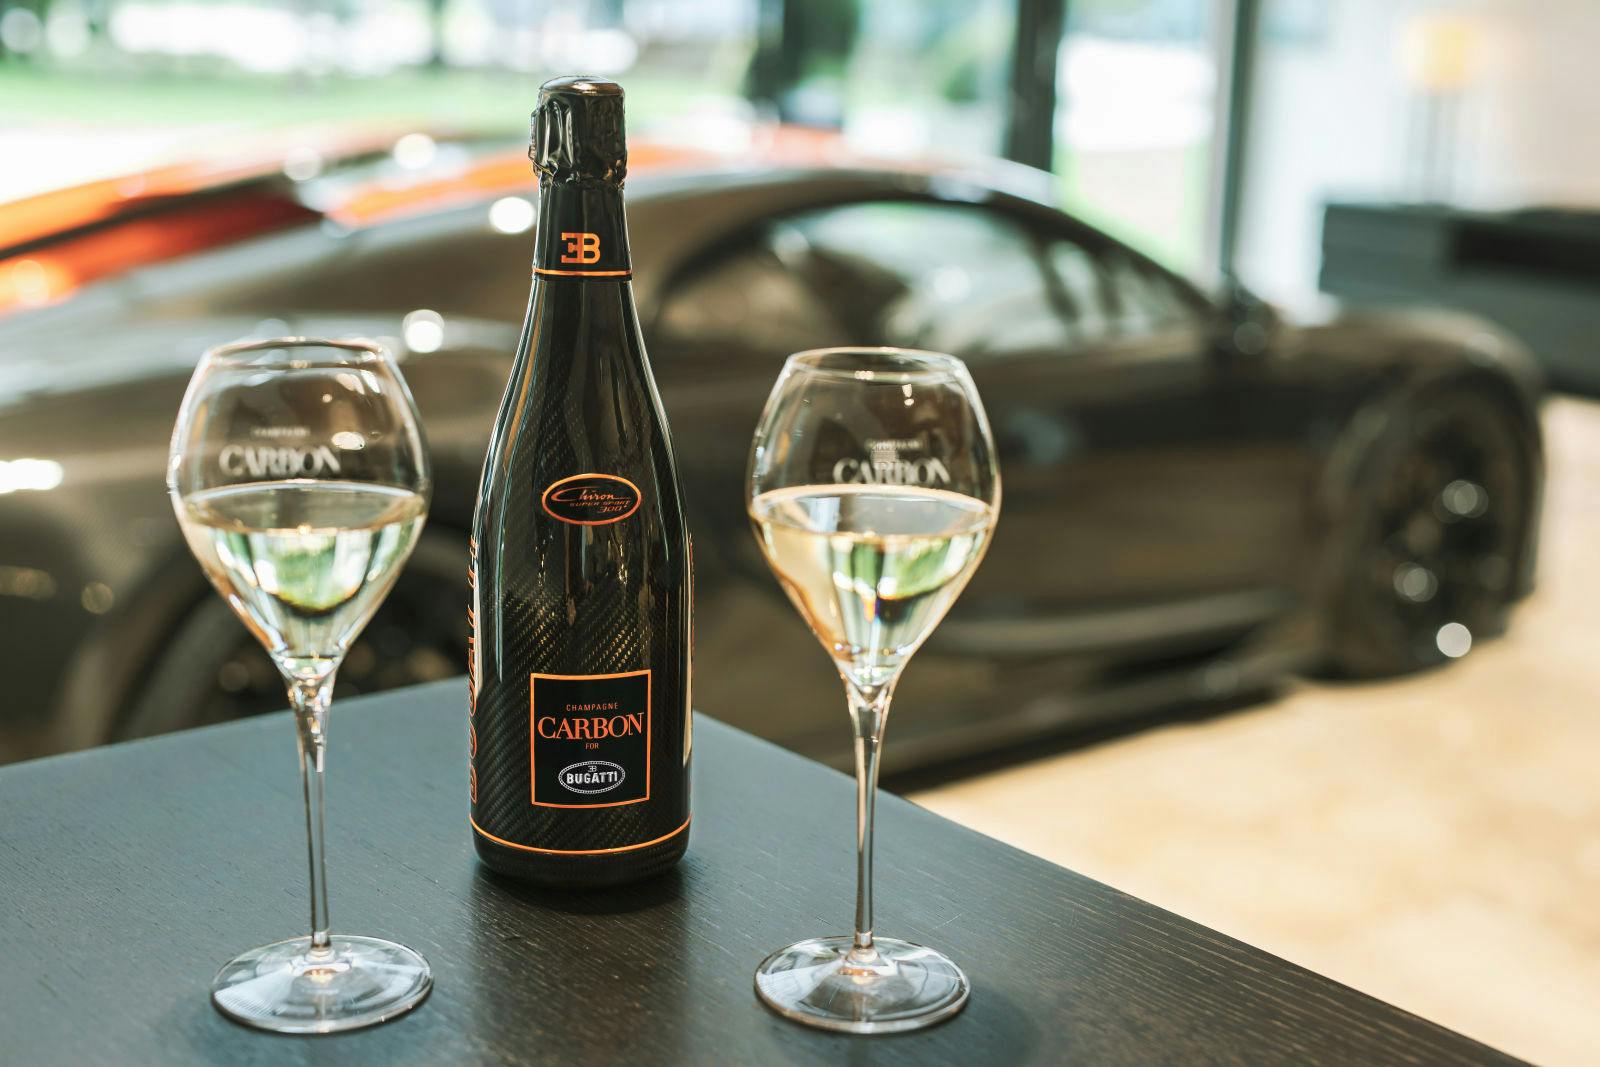 Un véhicule exceptionnel et un champagne exceptionnel : la Bugatti Chiron Super Sport 300+ et la Carbon EB.02 Chiron 300+ dans la Customer Lounge Bugatti au siège de la marque à Molsheim.